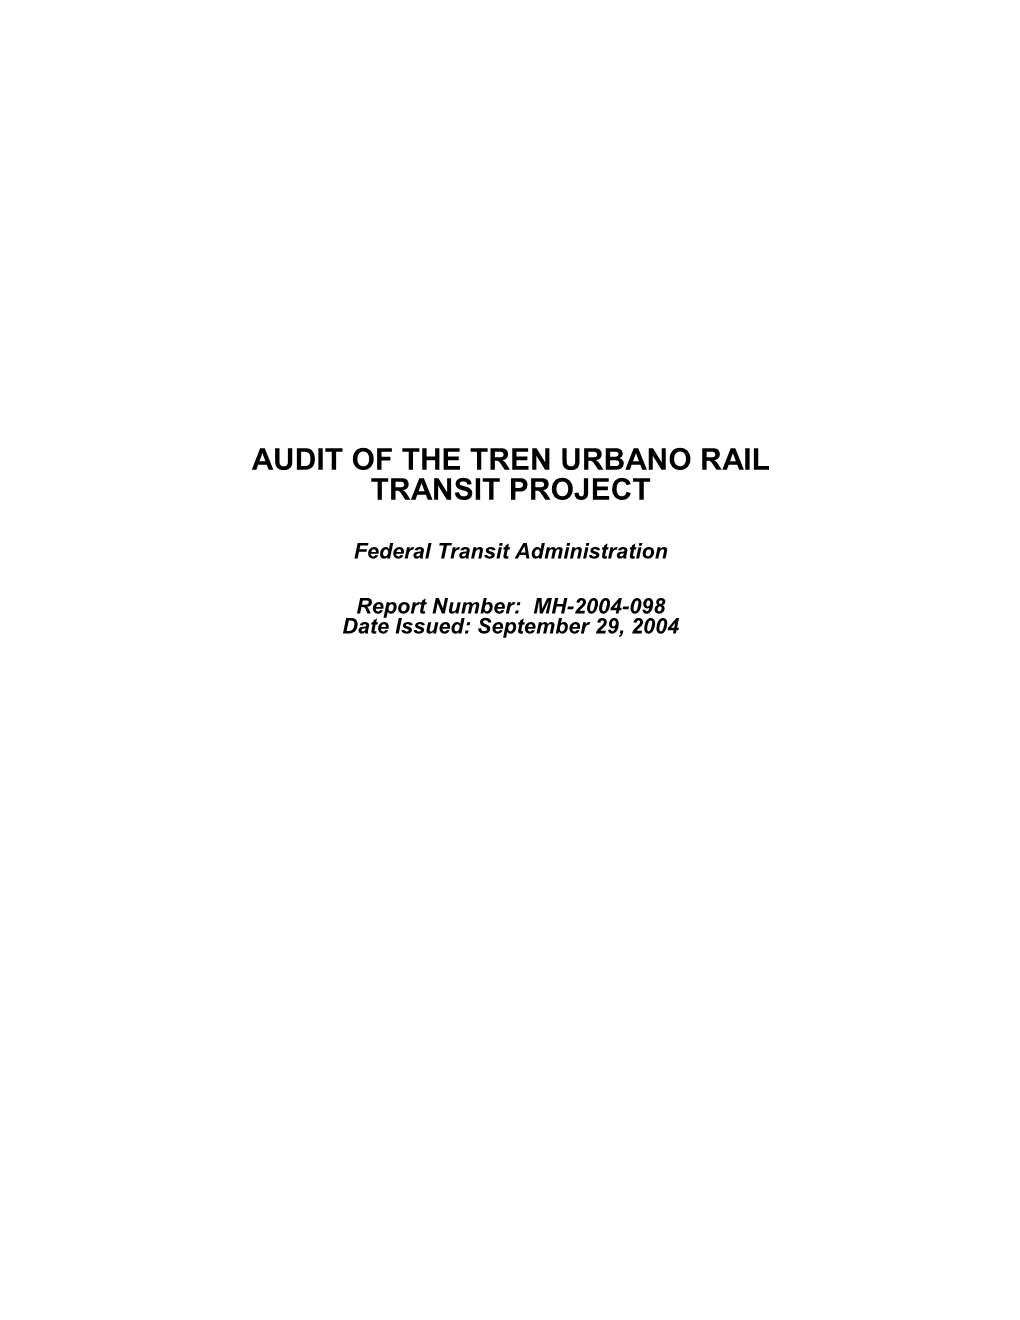 Audit of the Tren Urbano Rail Transit Project